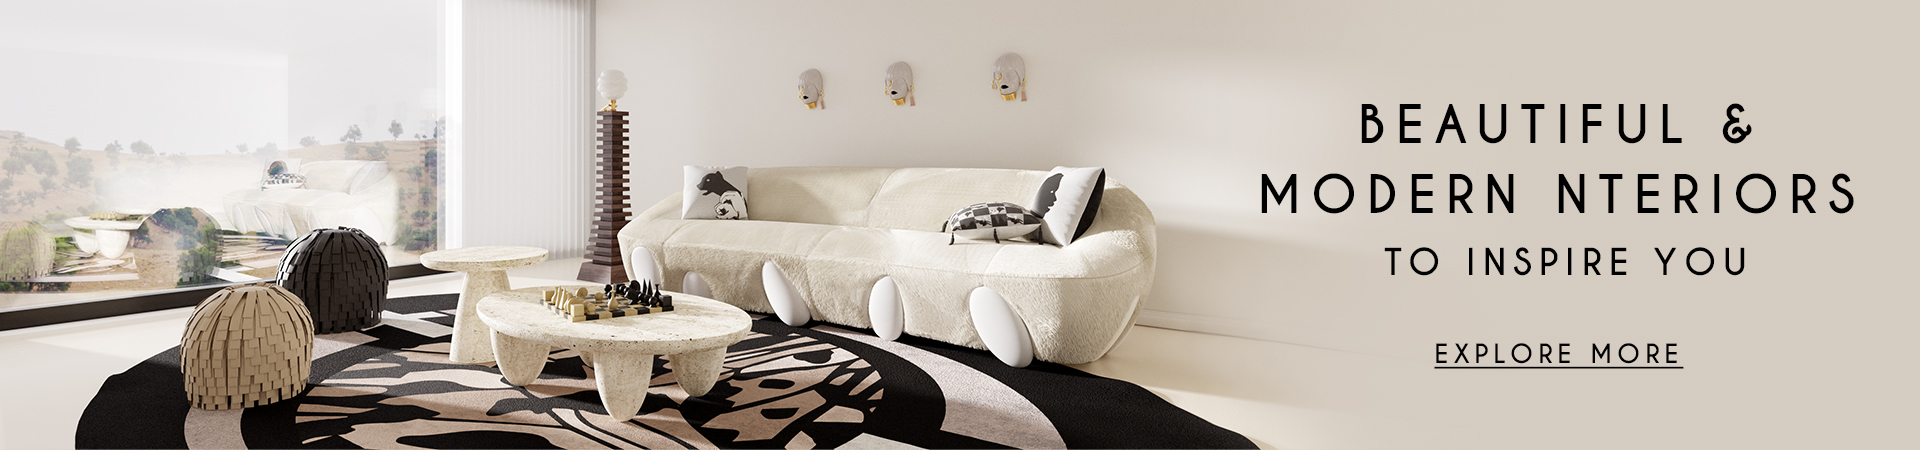 hommes studio beautiful and modern interiors banner blog